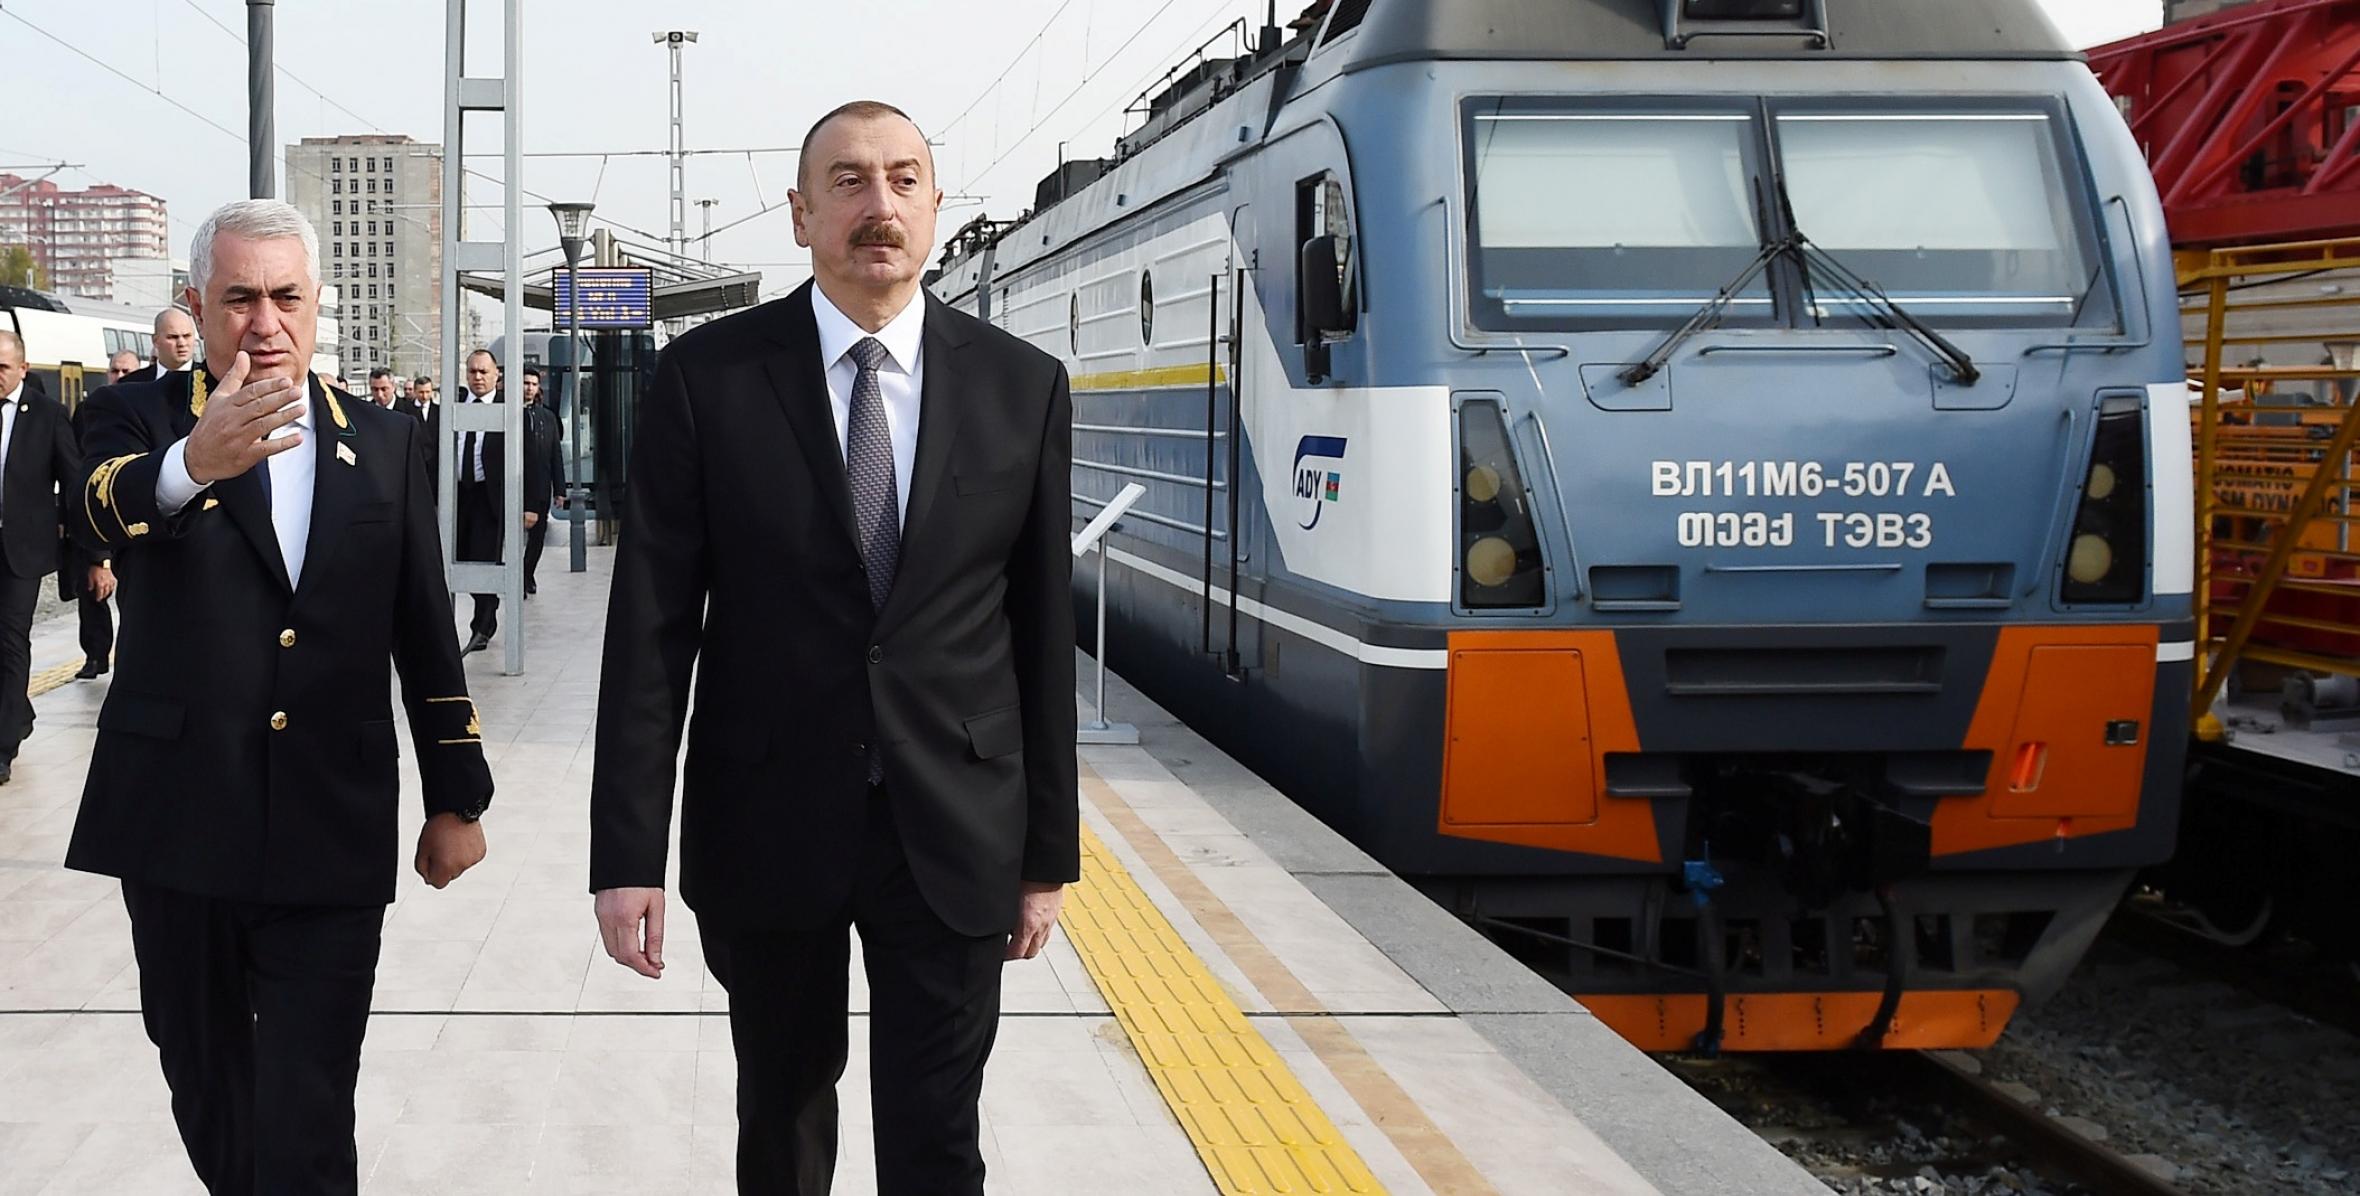 Visit of Ilham Aliyev to Sumgayit